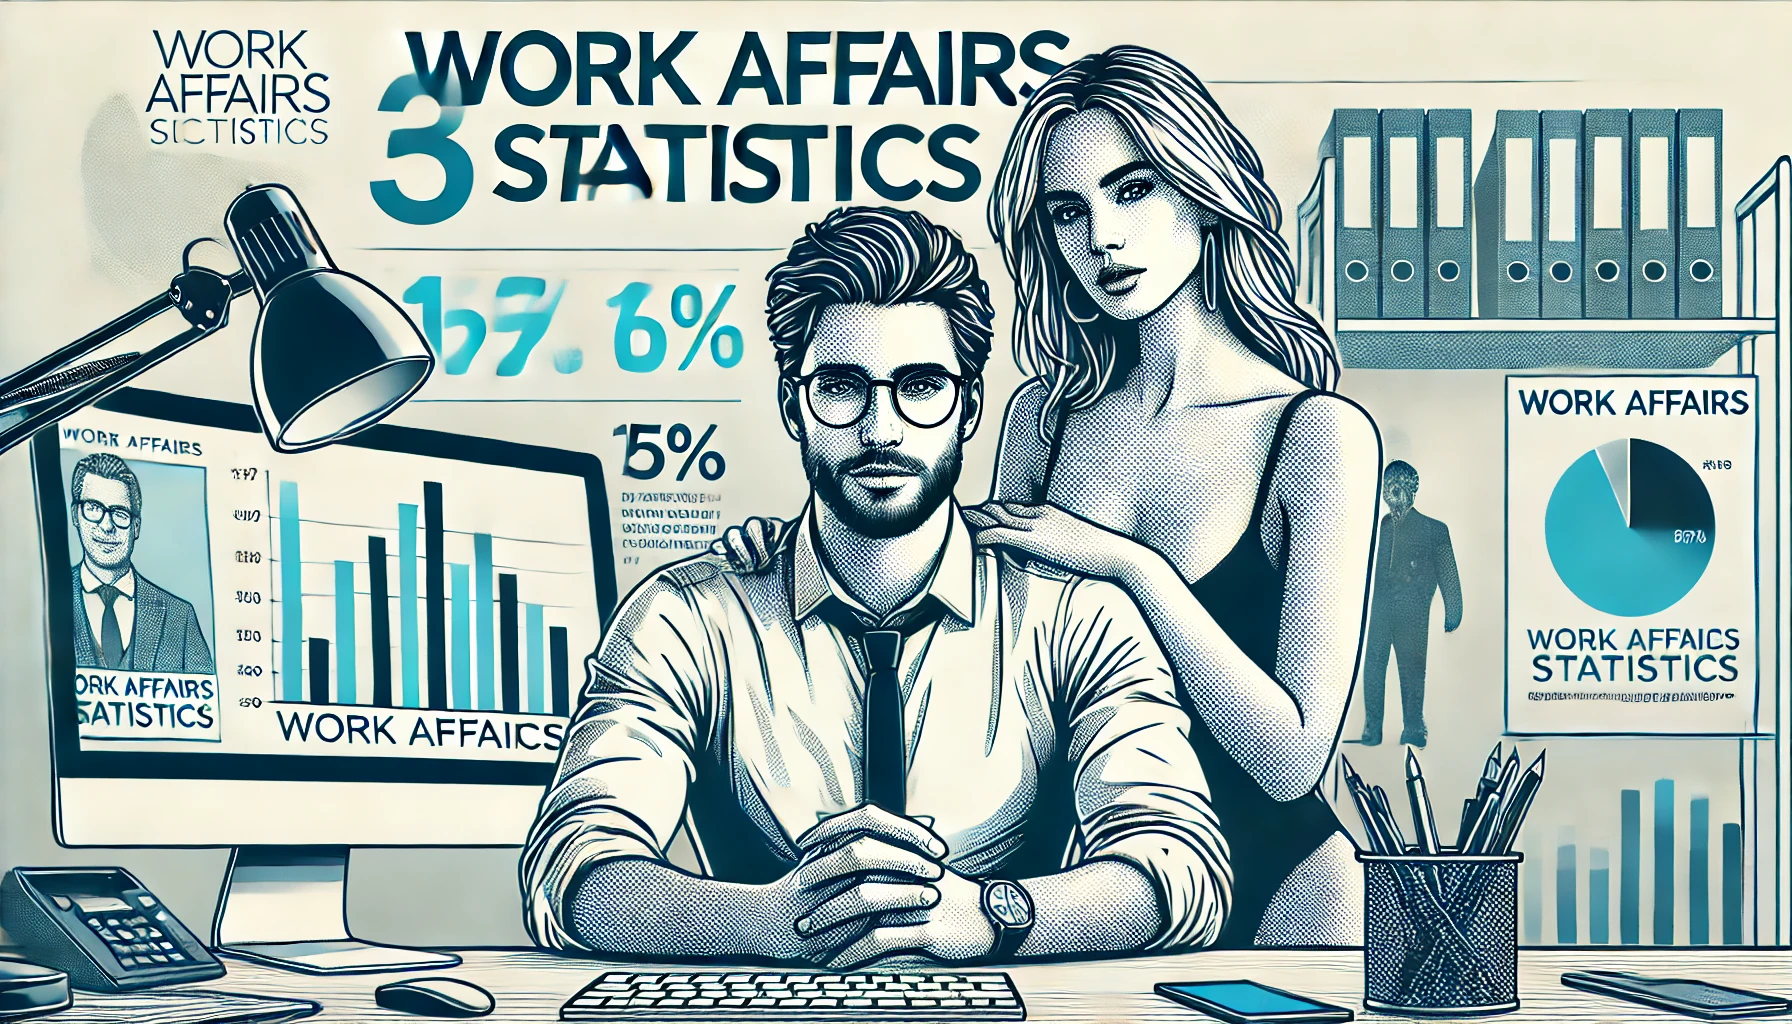 Work Affairs Statistics